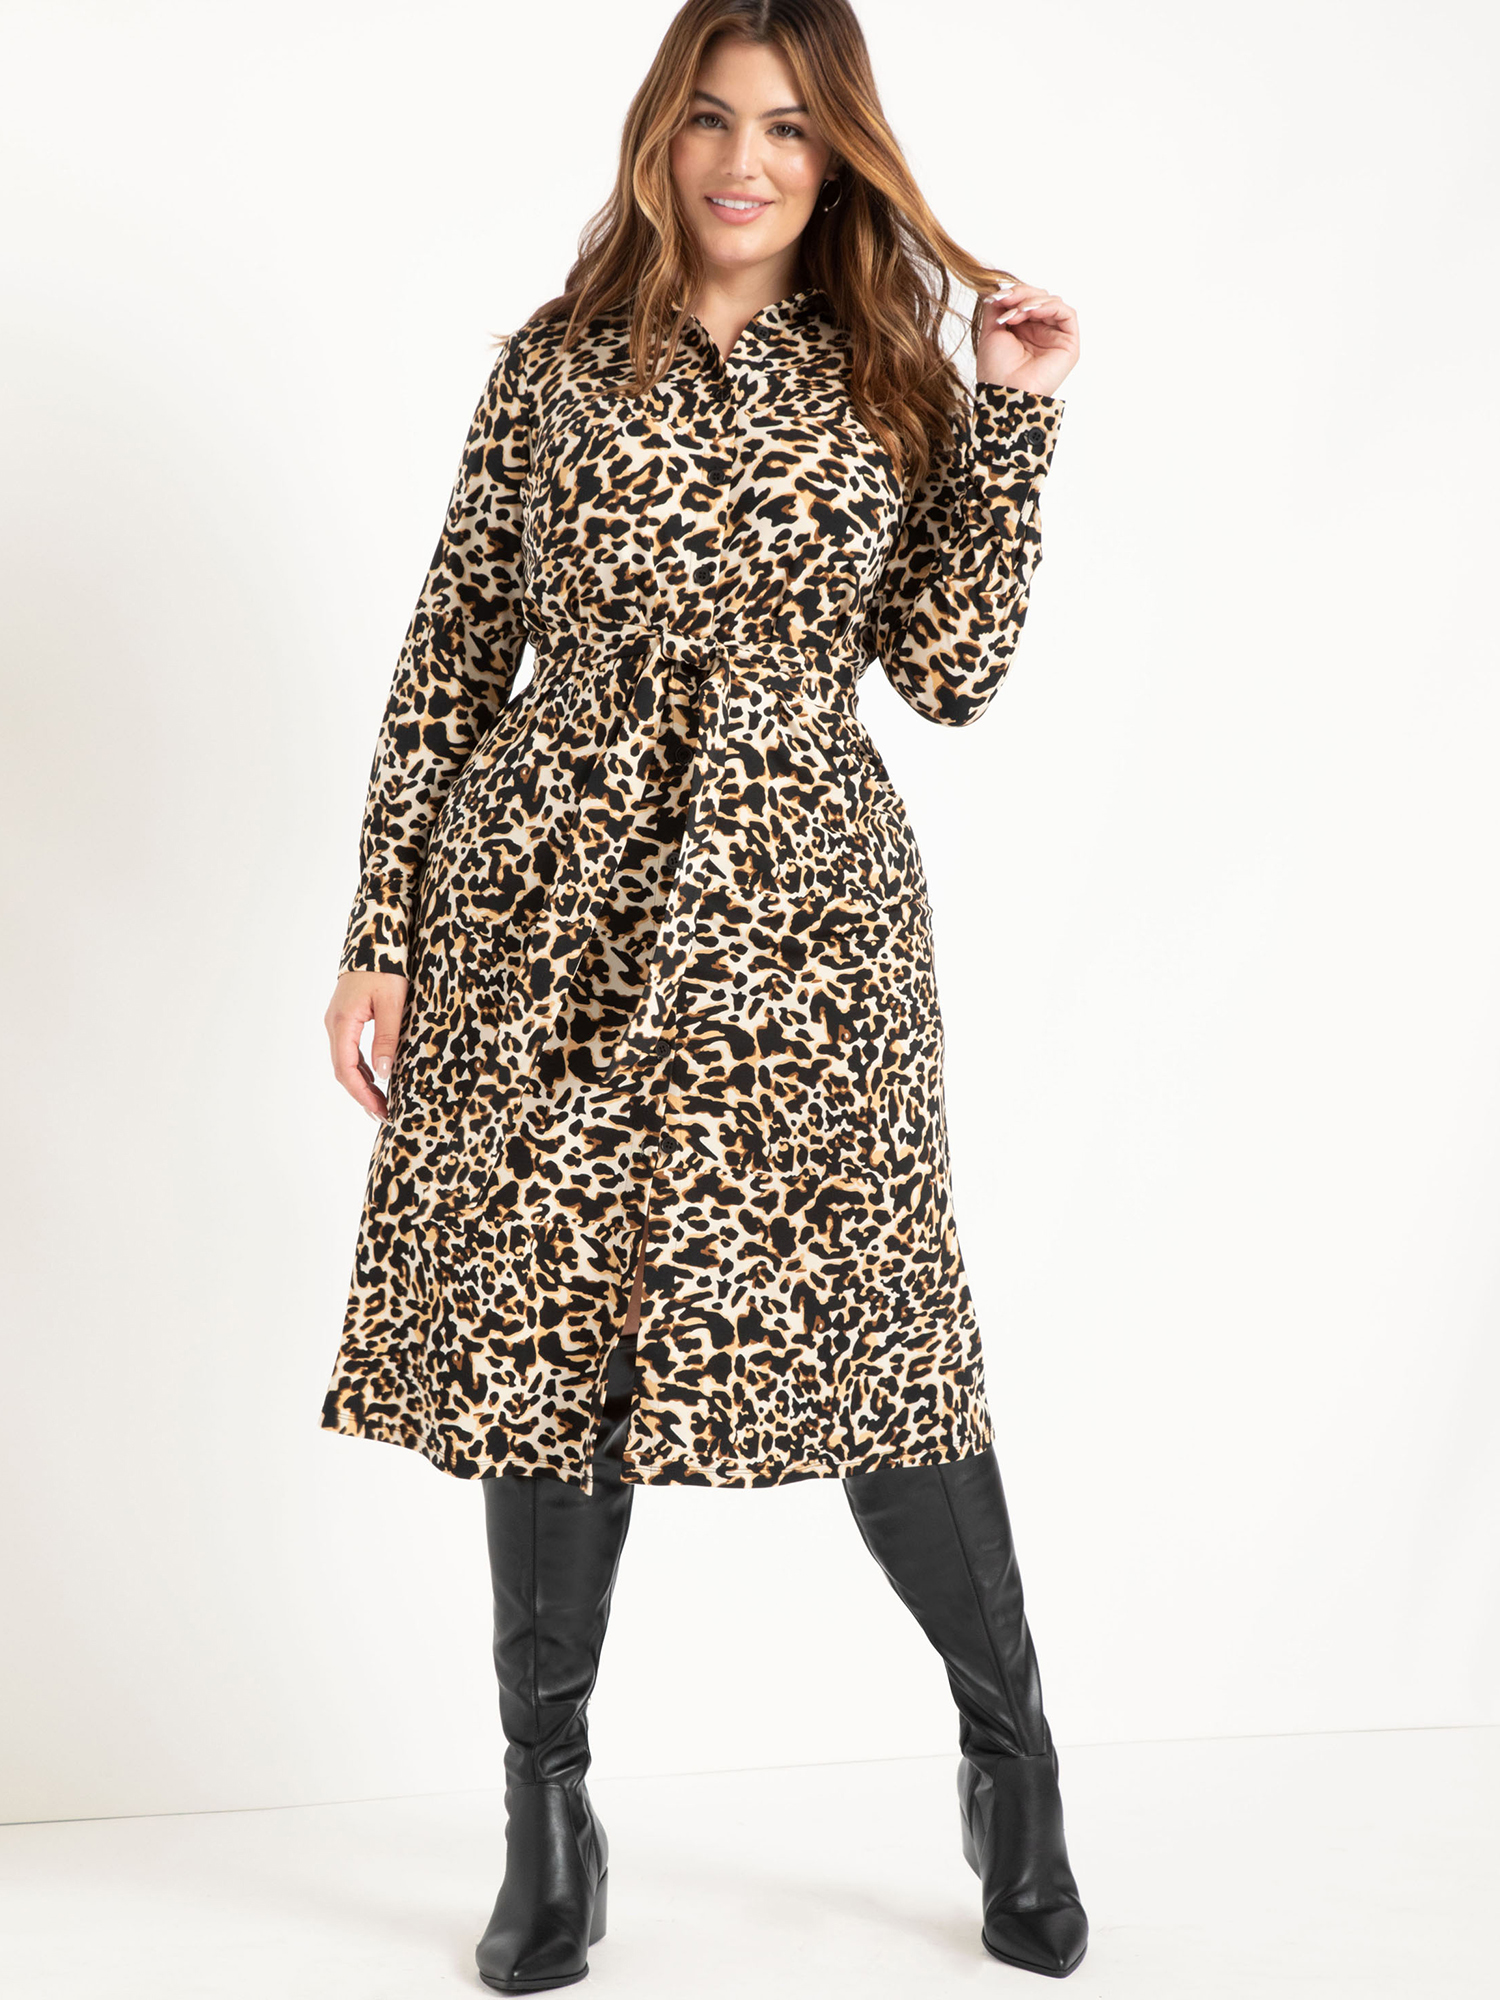 ELOQUII Elements Women's Plus Size Leopard Print Midi Shirtdress - image 1 of 4